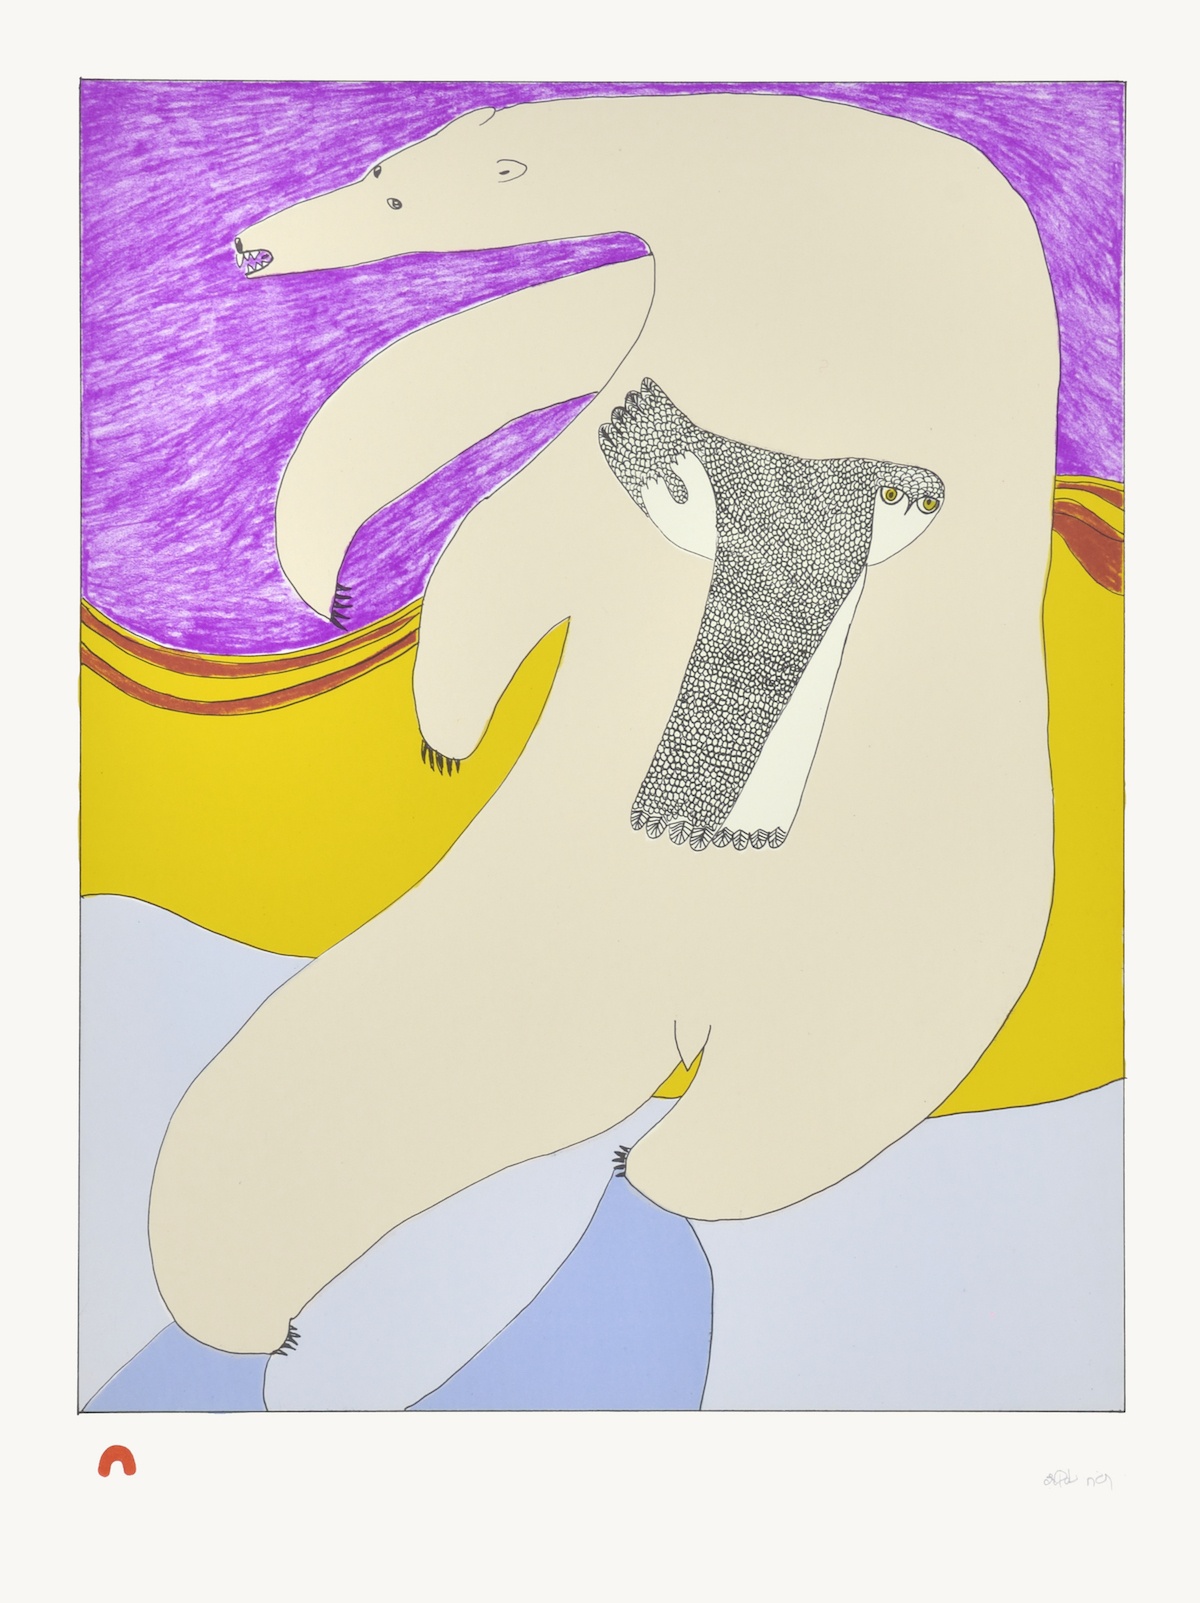 Title: Bear & Owl Artist: Ningeokuluk Teevee Medium: Lithograph Paper: BFK Rives White Printer: Niveaksie Quvianaqtuliaq Cape Dorset Print Collection 2015 Size: 24 3/4 x 23 1/2 inches (51 x 38.3 cm) Price: $600